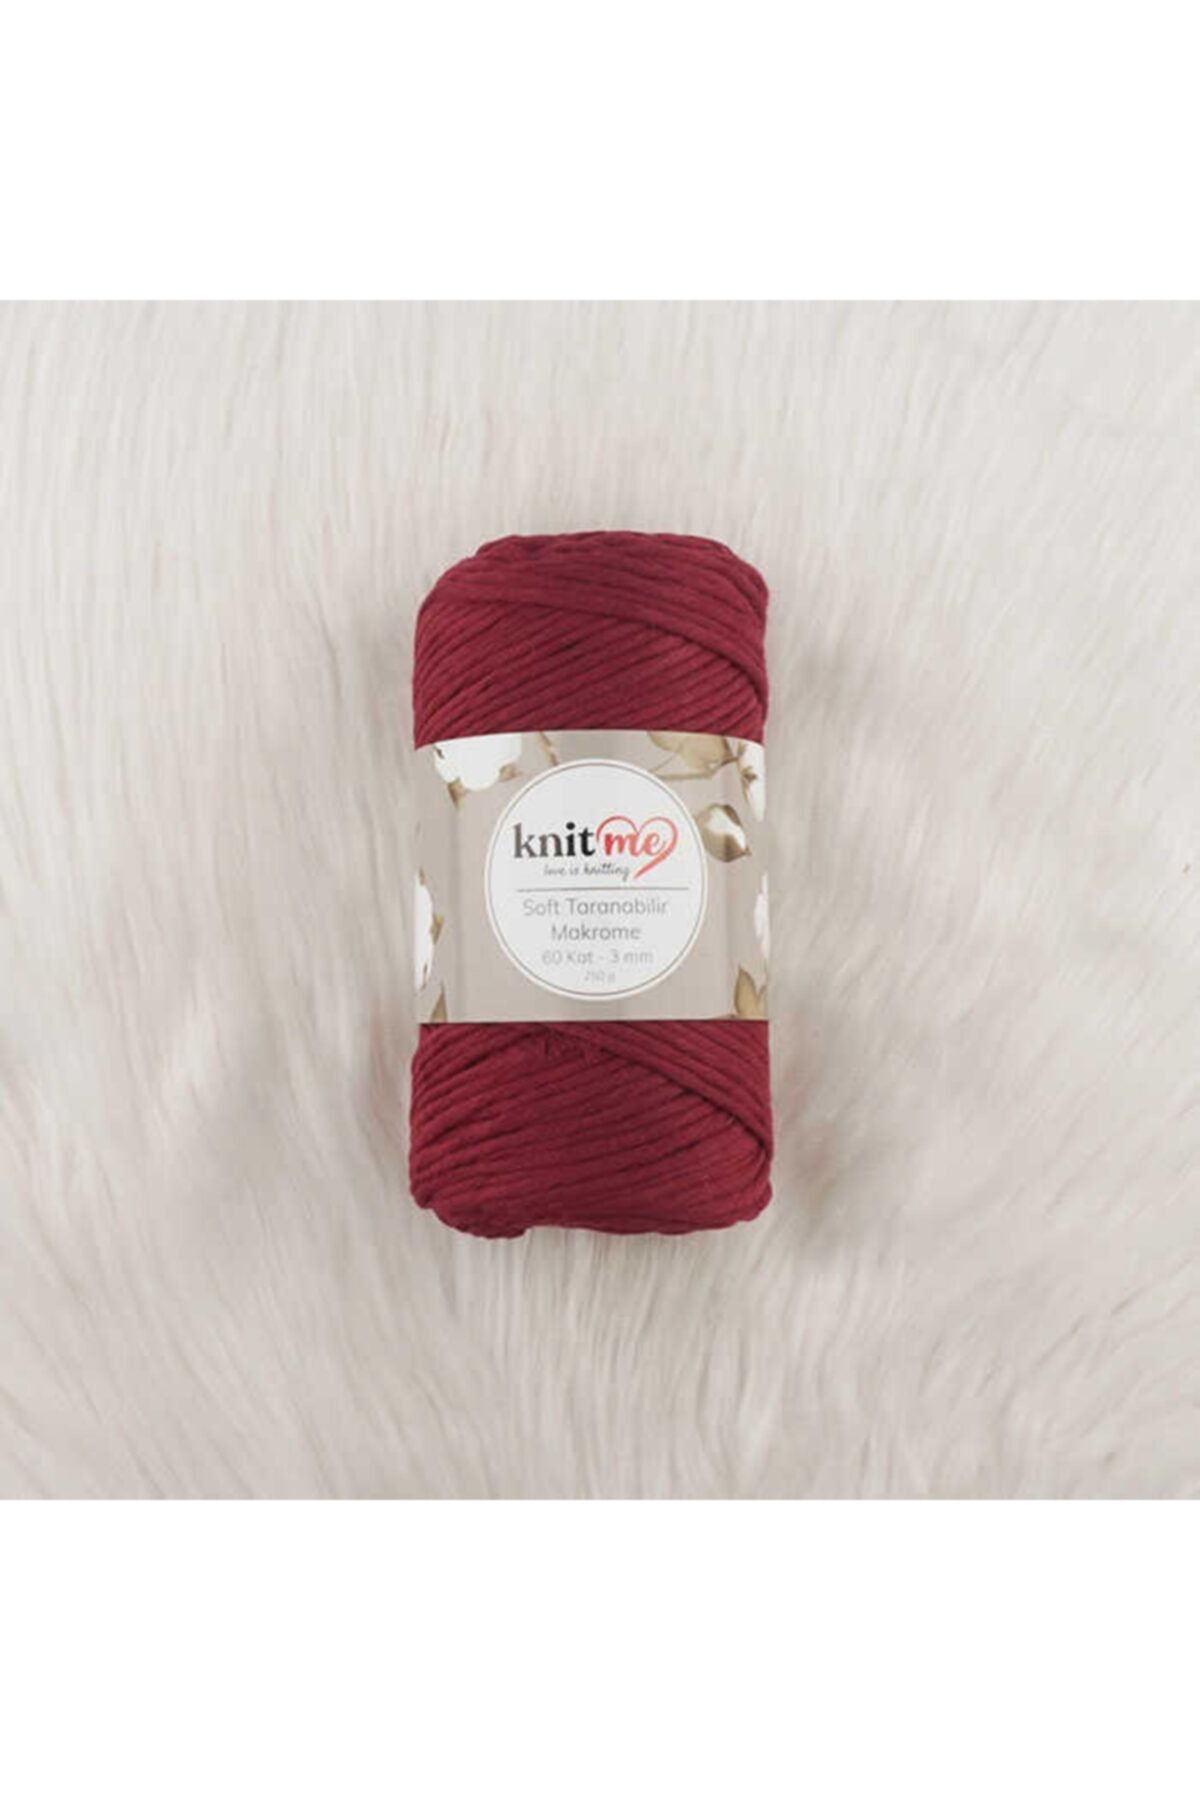 knitme Knit Me Soft Taranabilir Makrome Ipi 60 Kat 3 Mm.250 Gr. 501